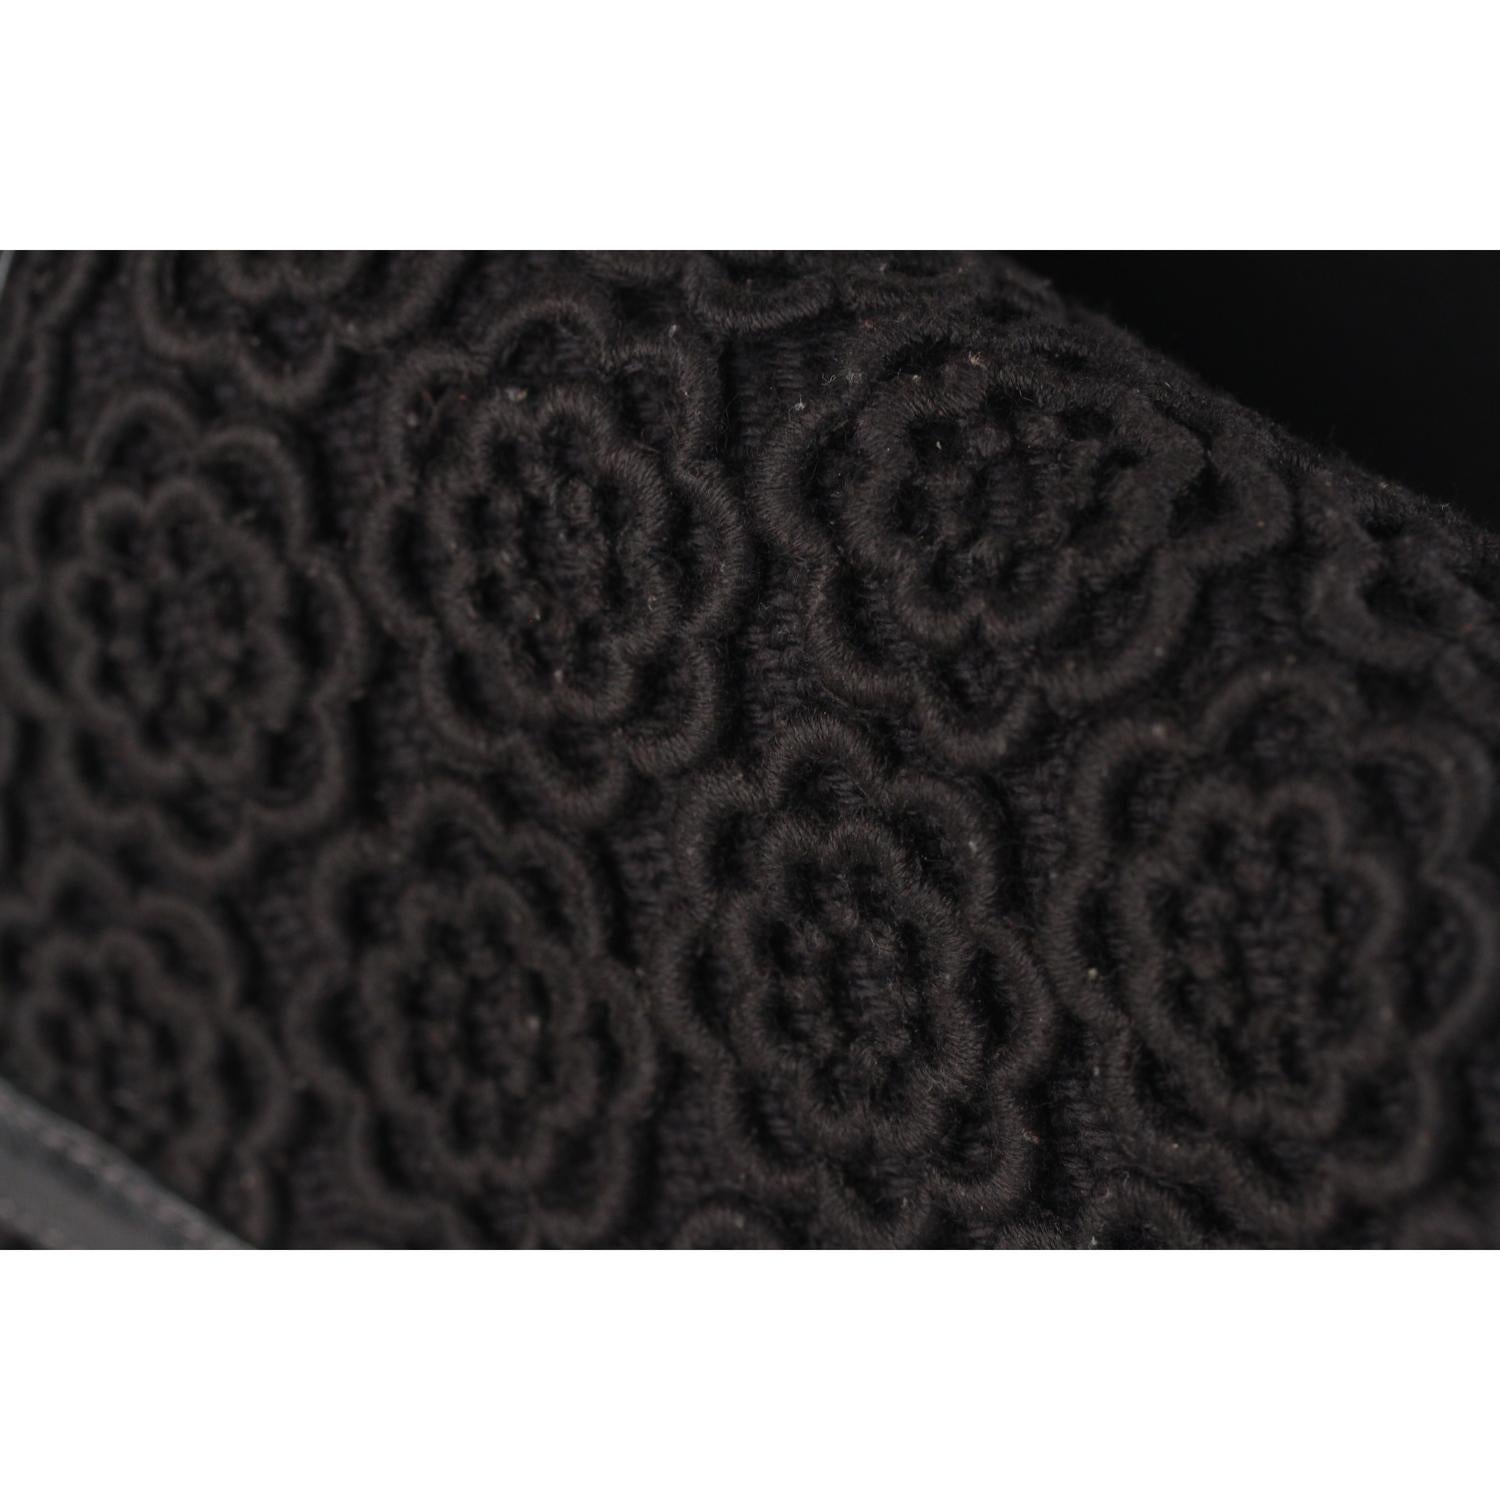 Dolce & Gabbana Black Crochet Miss Bonita Satchel Handbag 2